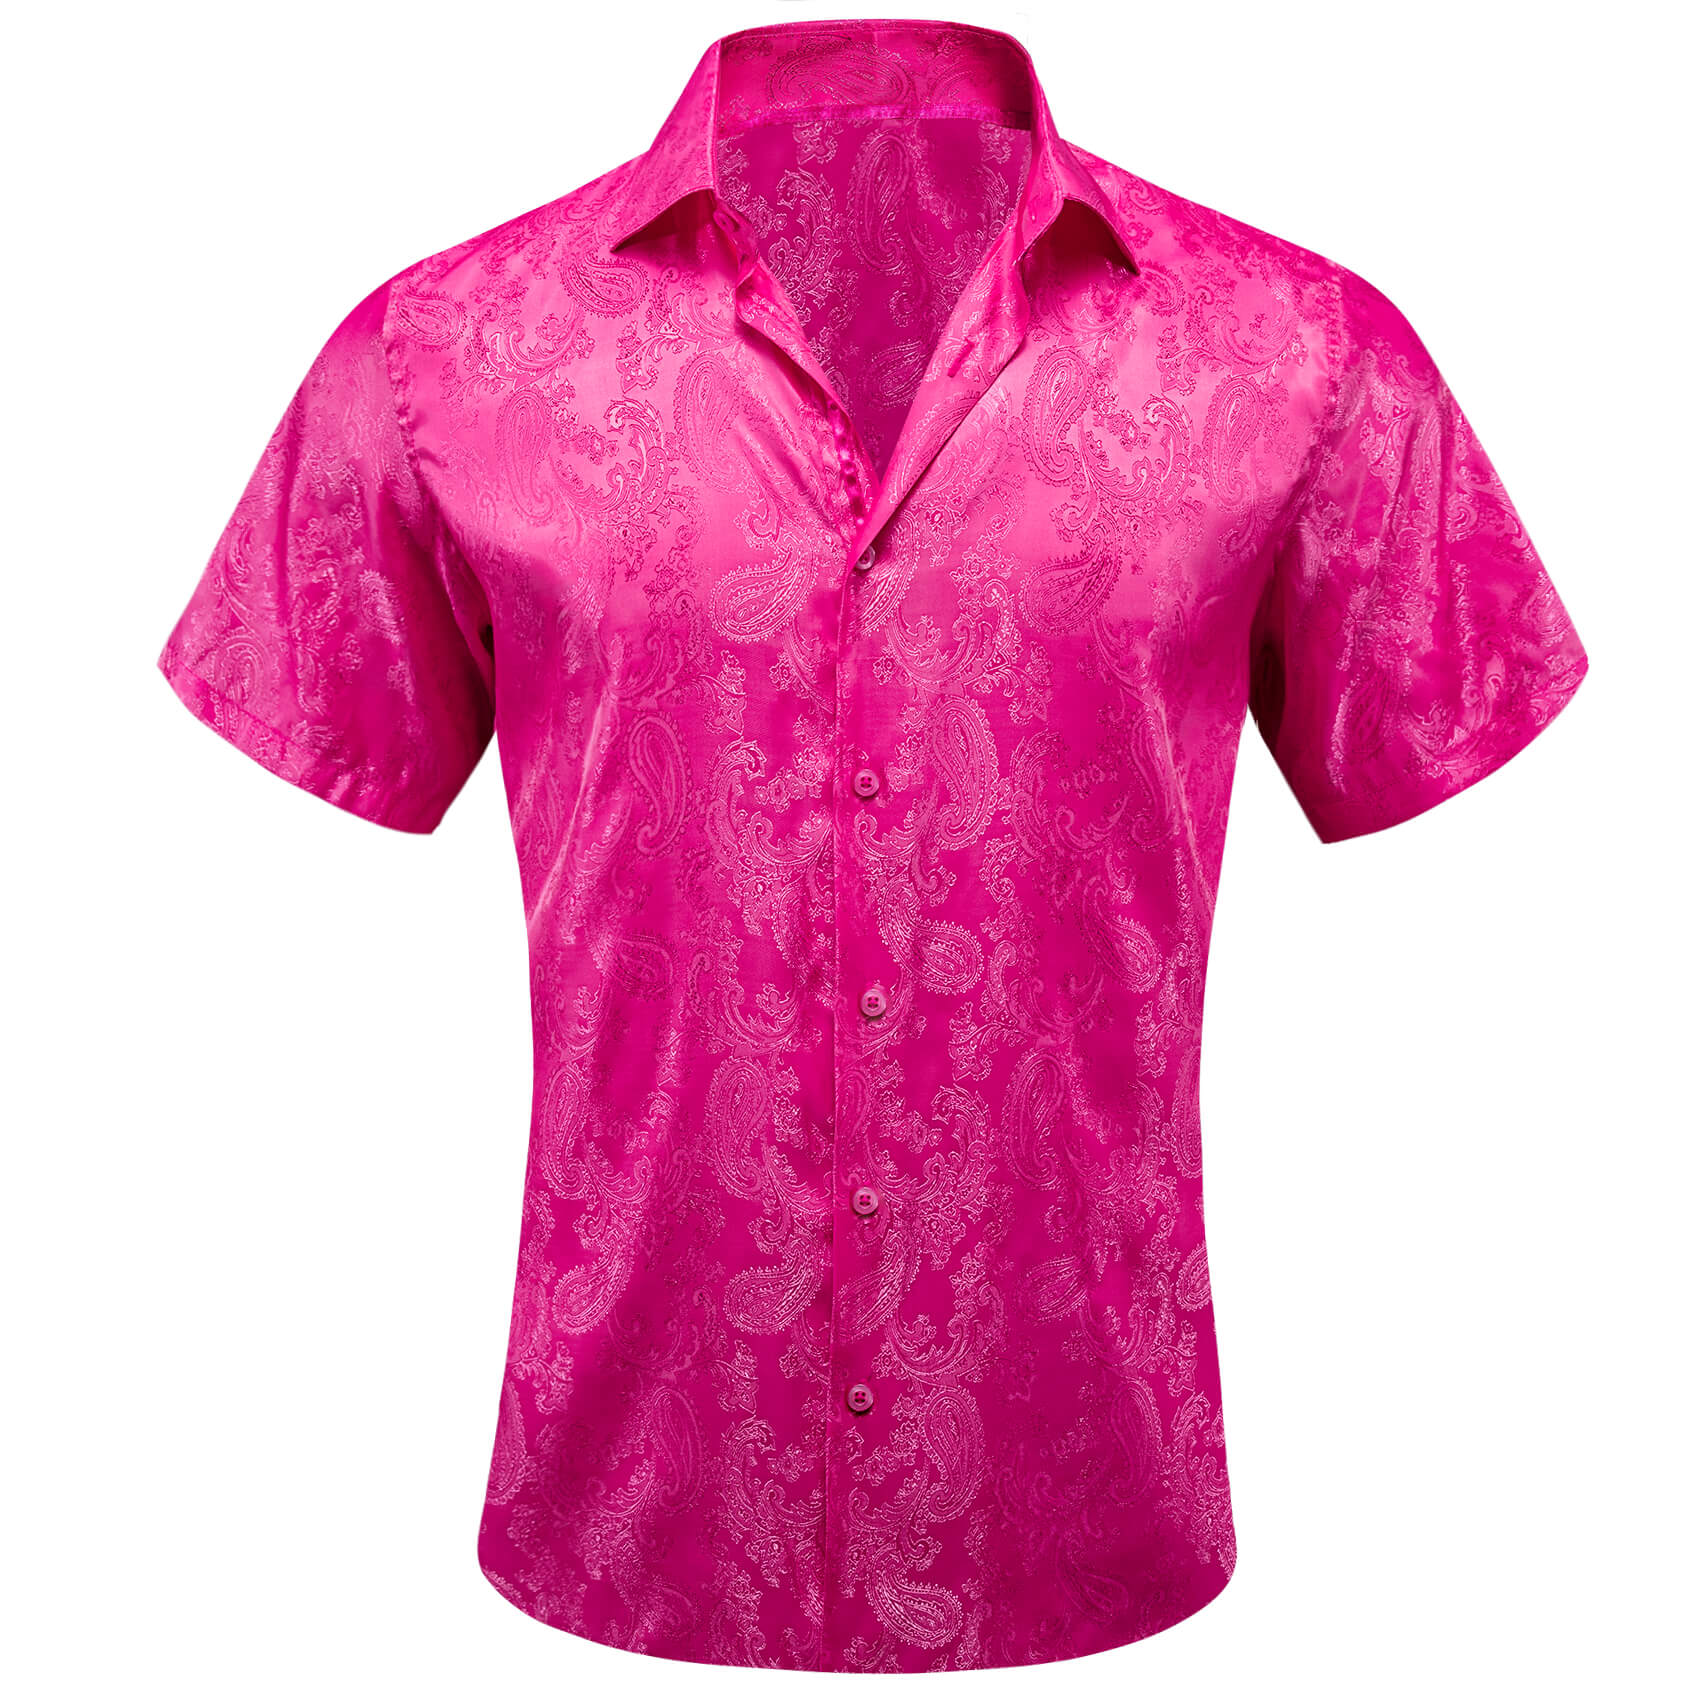  Short Sleeve Shirt Jacquard Paisley Deep Pink Shirt